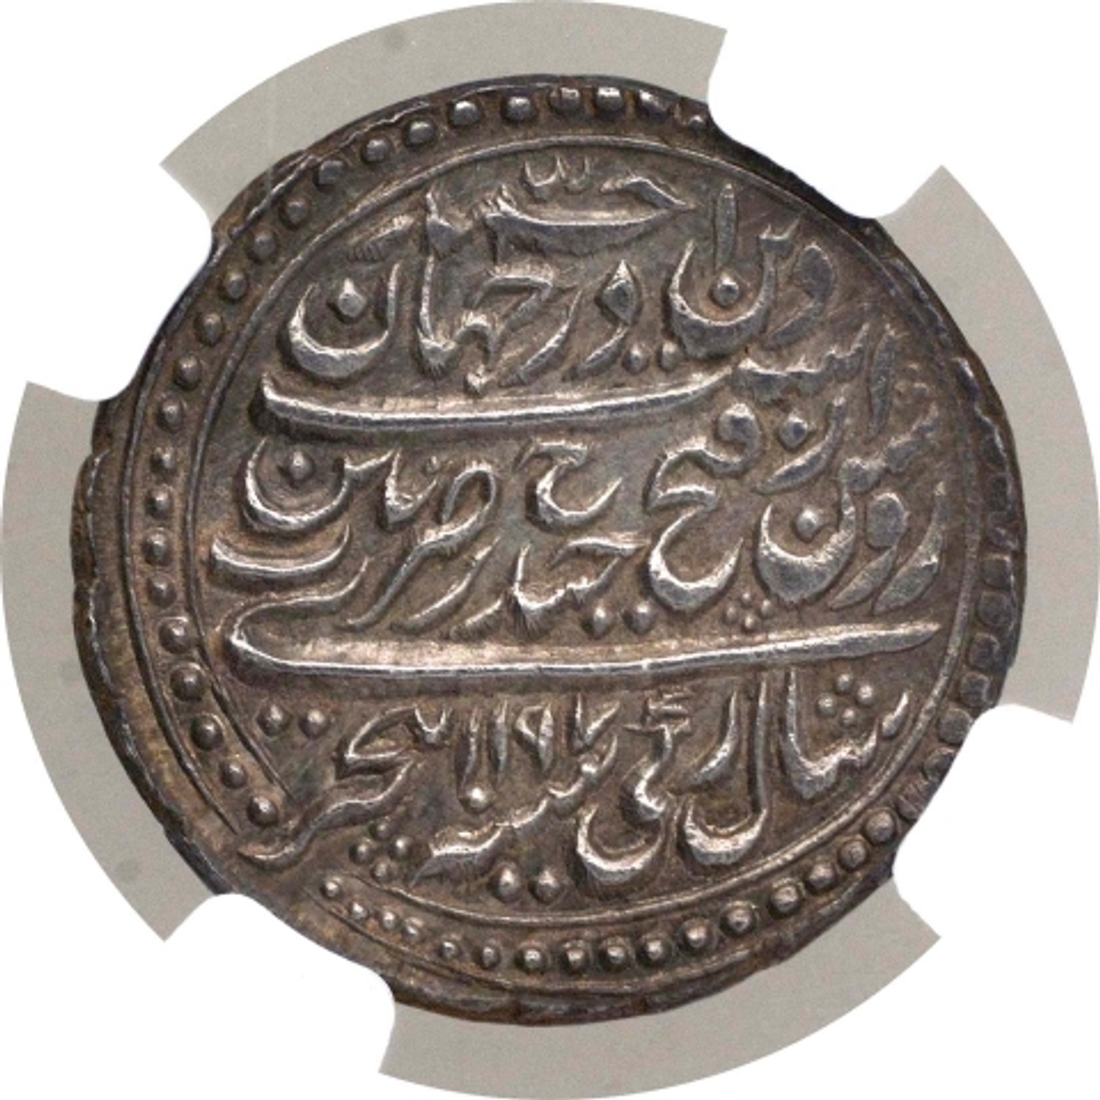 Silver Half Rupee Coin of Tipu Sultan of Patan Mint of Mysore Kingdom.